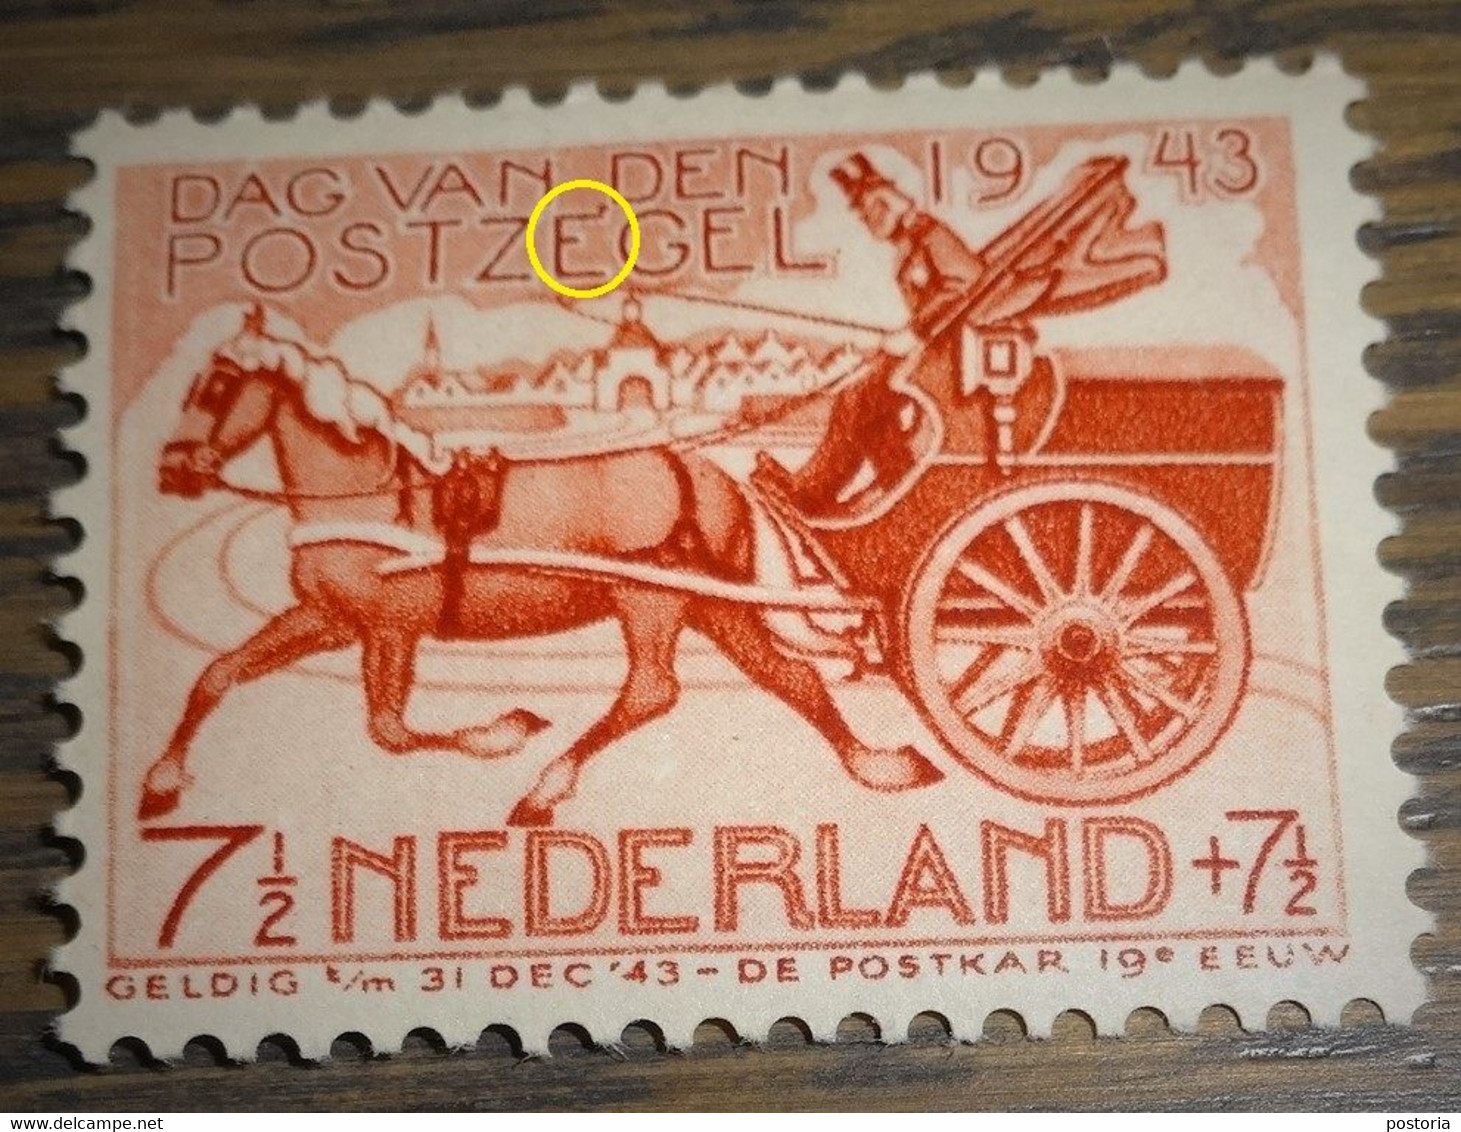 Nederland - MAST - 422 P - 1943 - Plaatfout - Postfris - Puntje Boven 1e E Van POSTZEGEL - Variedades Y Curiosidades